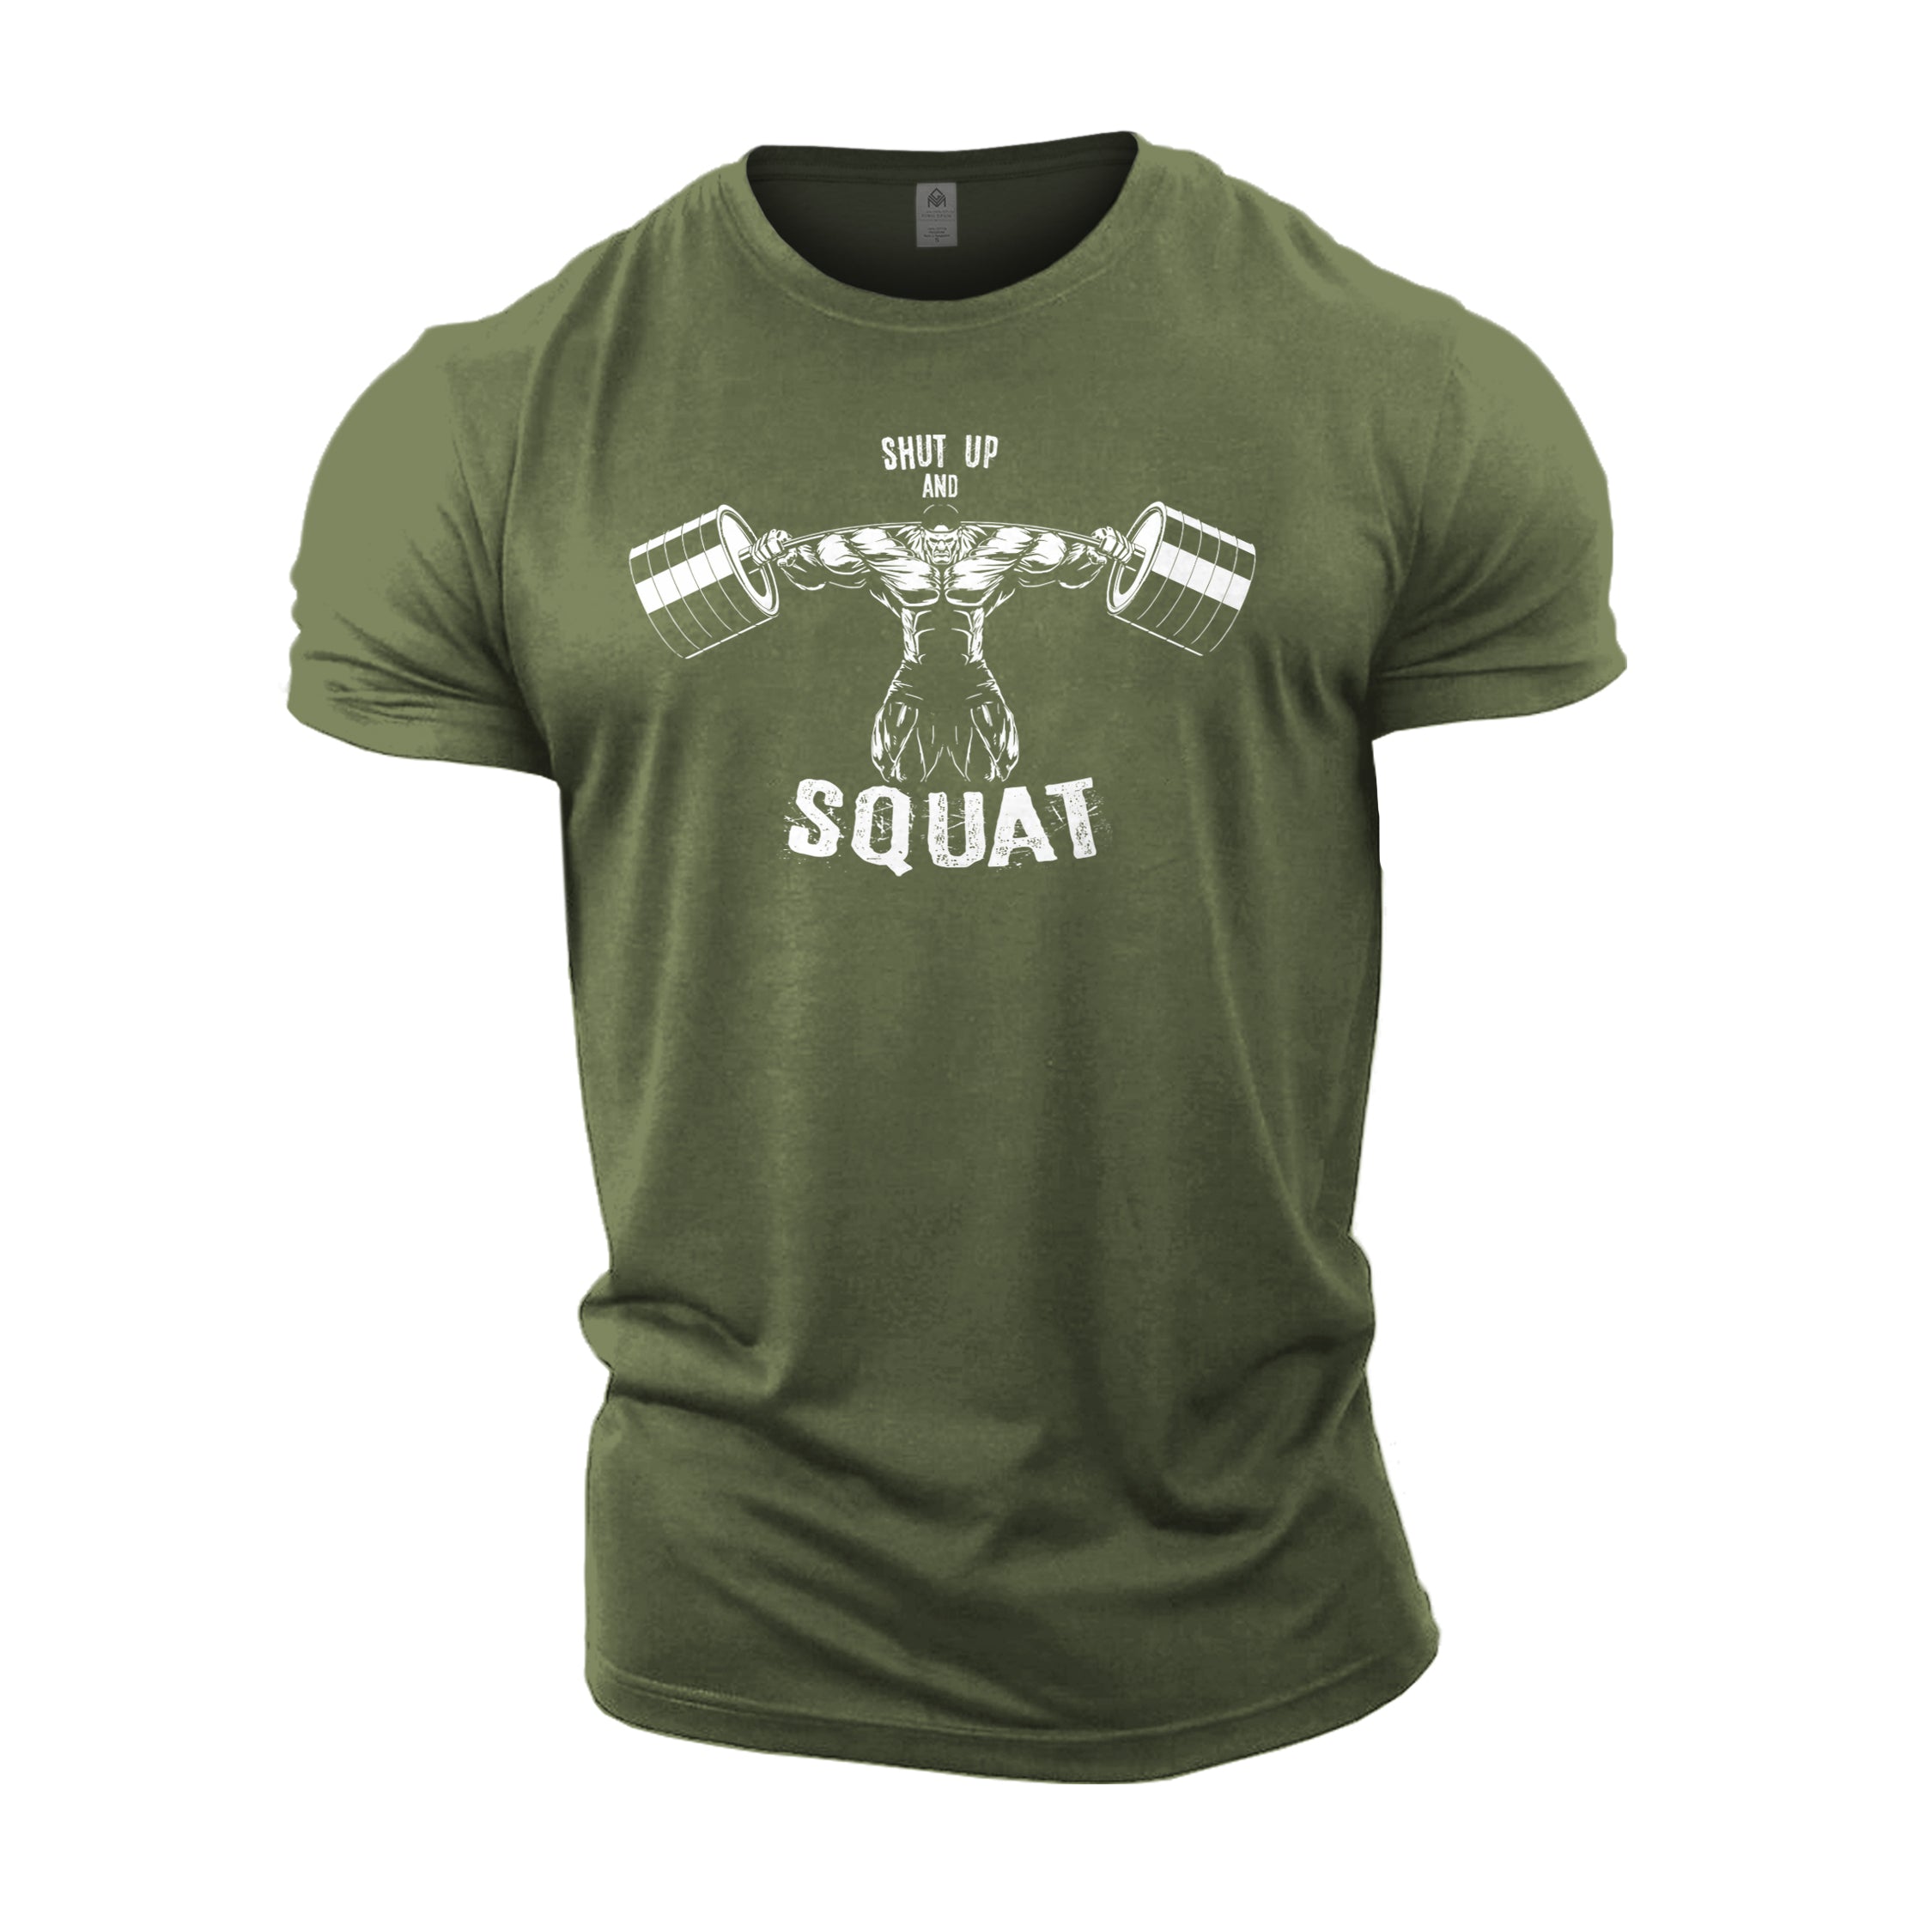 Shut Up And Squat - Gym T-Shirt